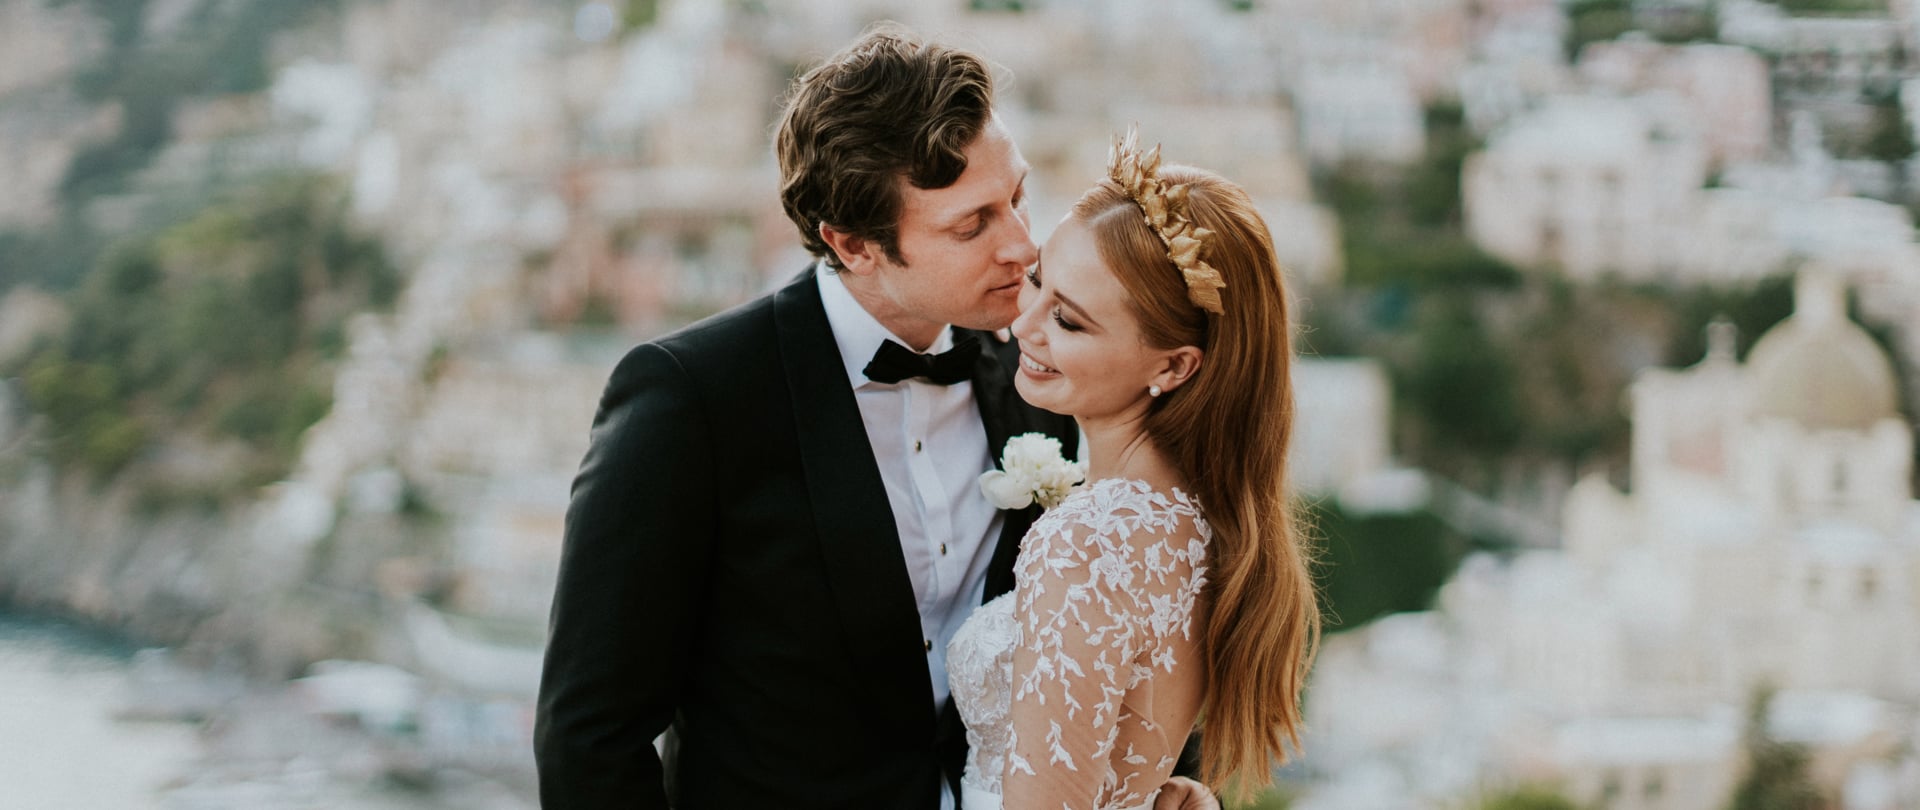 Yvette & Ben Wedding Video Filmed at Positano, Italy